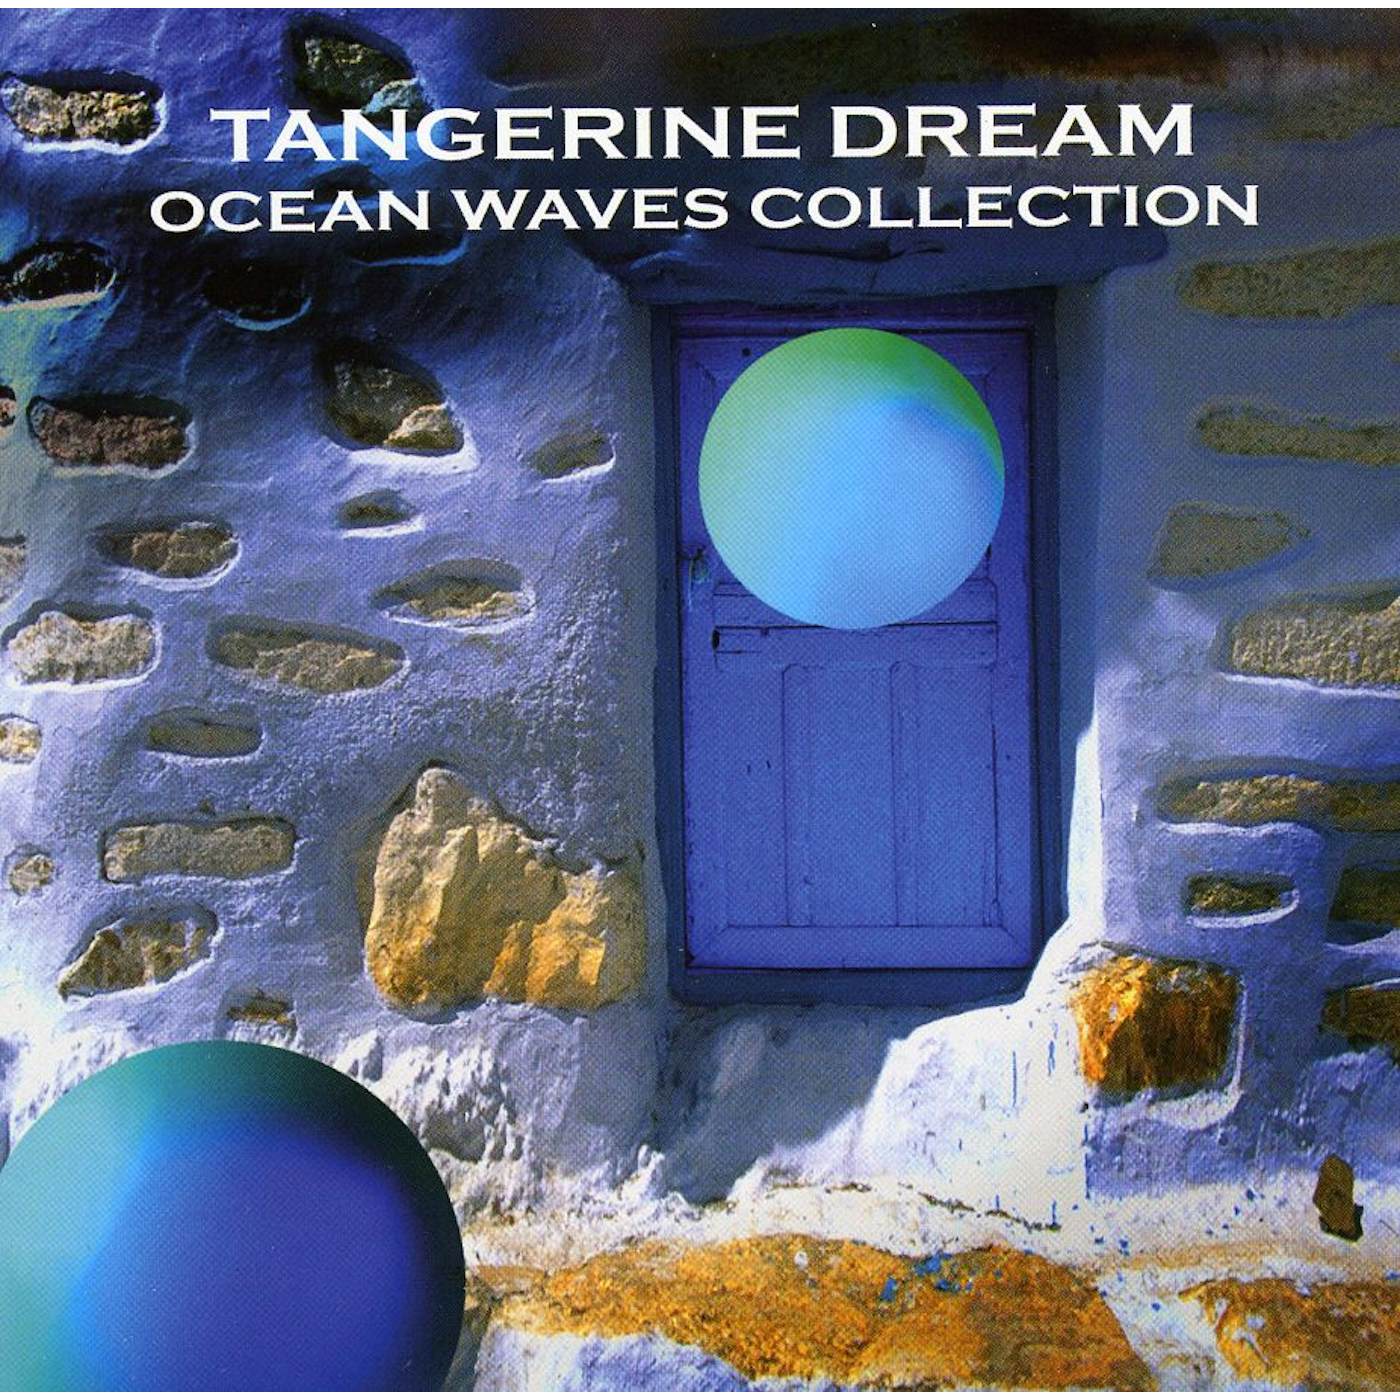 Tangerine Dream OCEAN WAVES COLLECTION CD